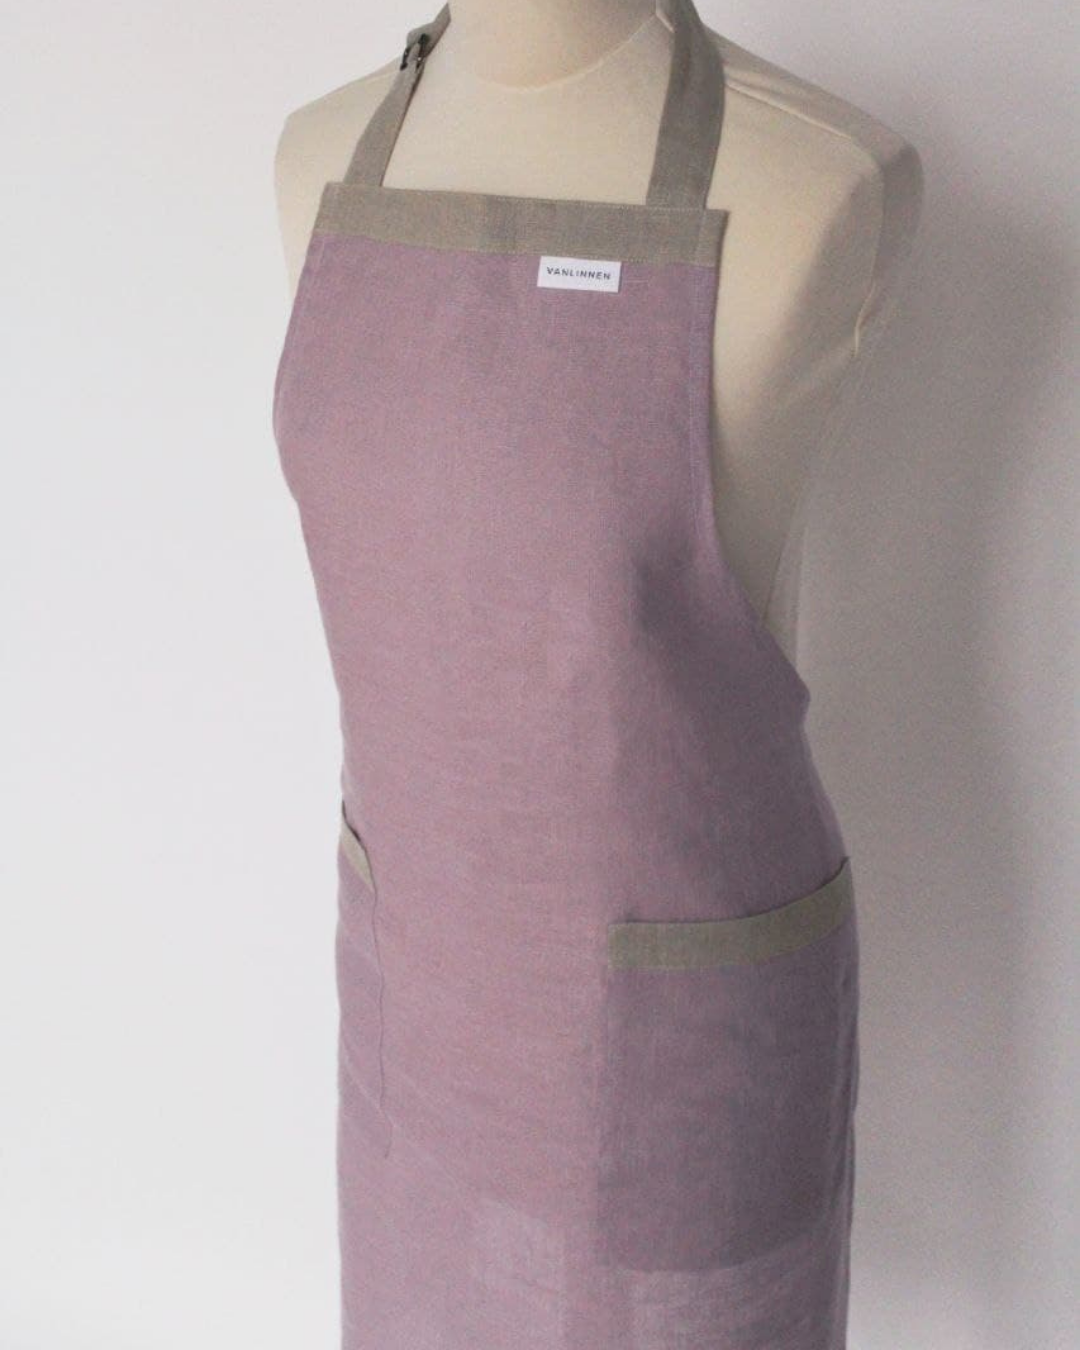 Linen apron in natural linen